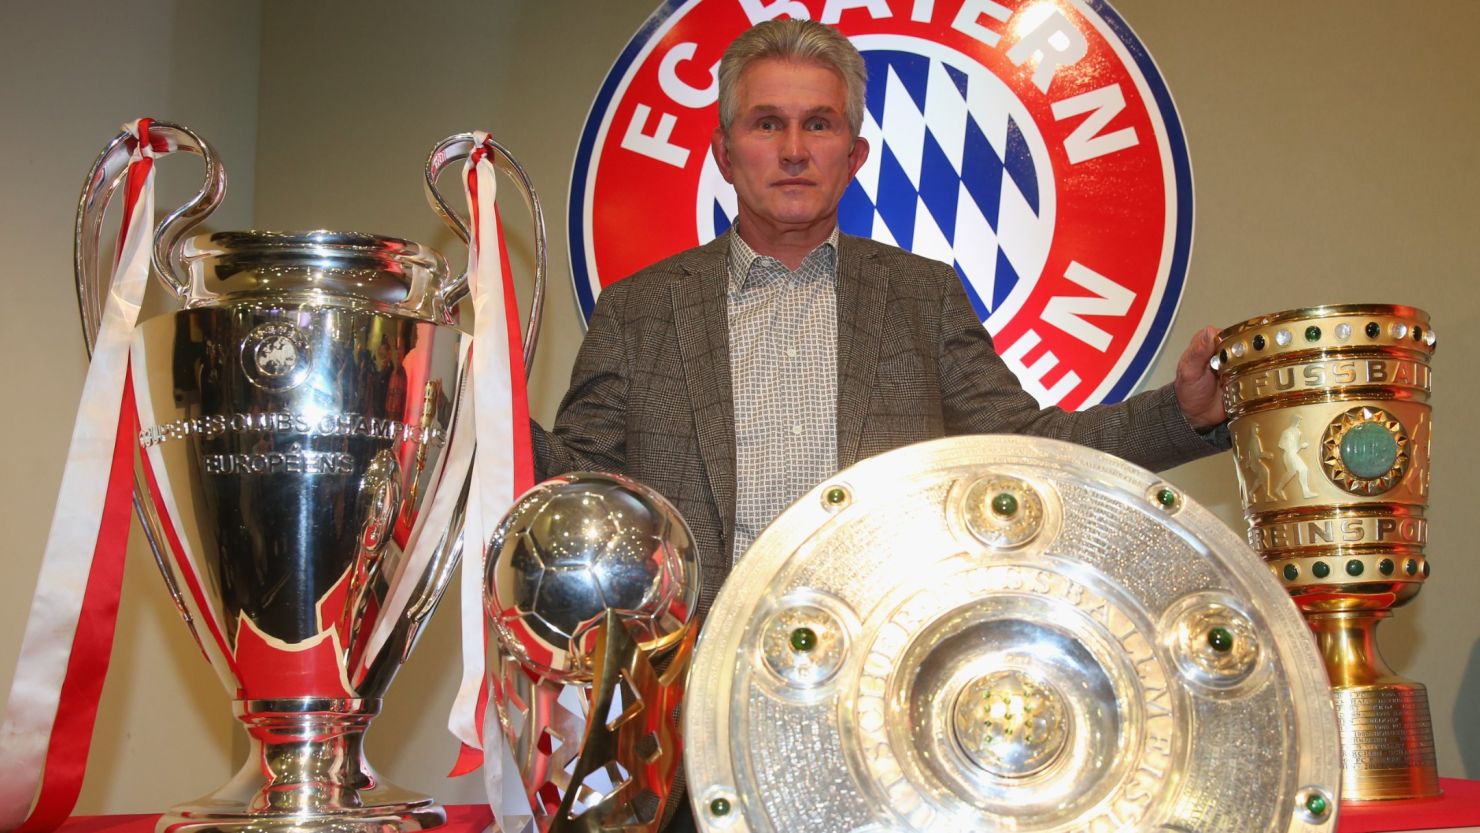 Jupp Heynckes is set to be succeeded as Bayern Munich coach by Josep Guardiola.